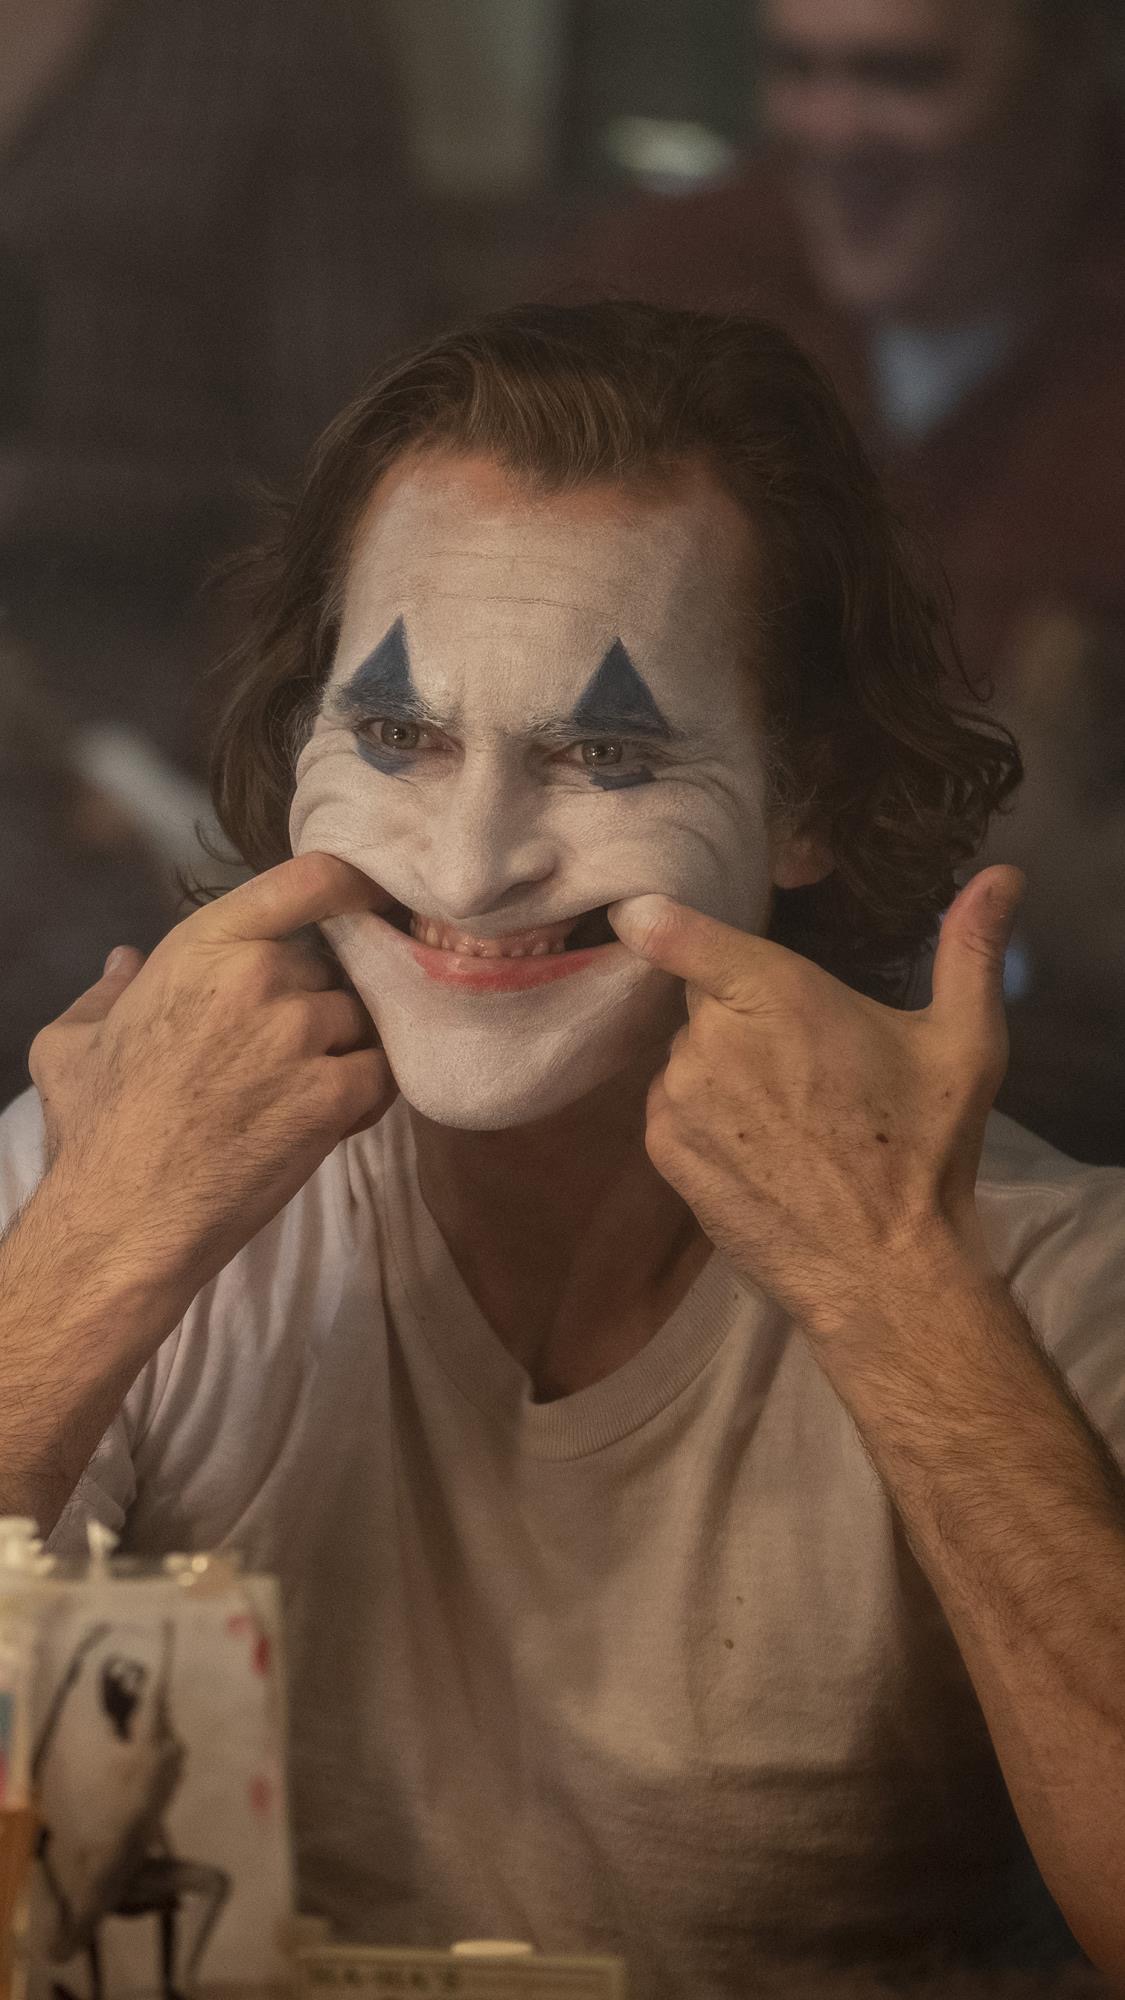 Joker小丑绝望图片